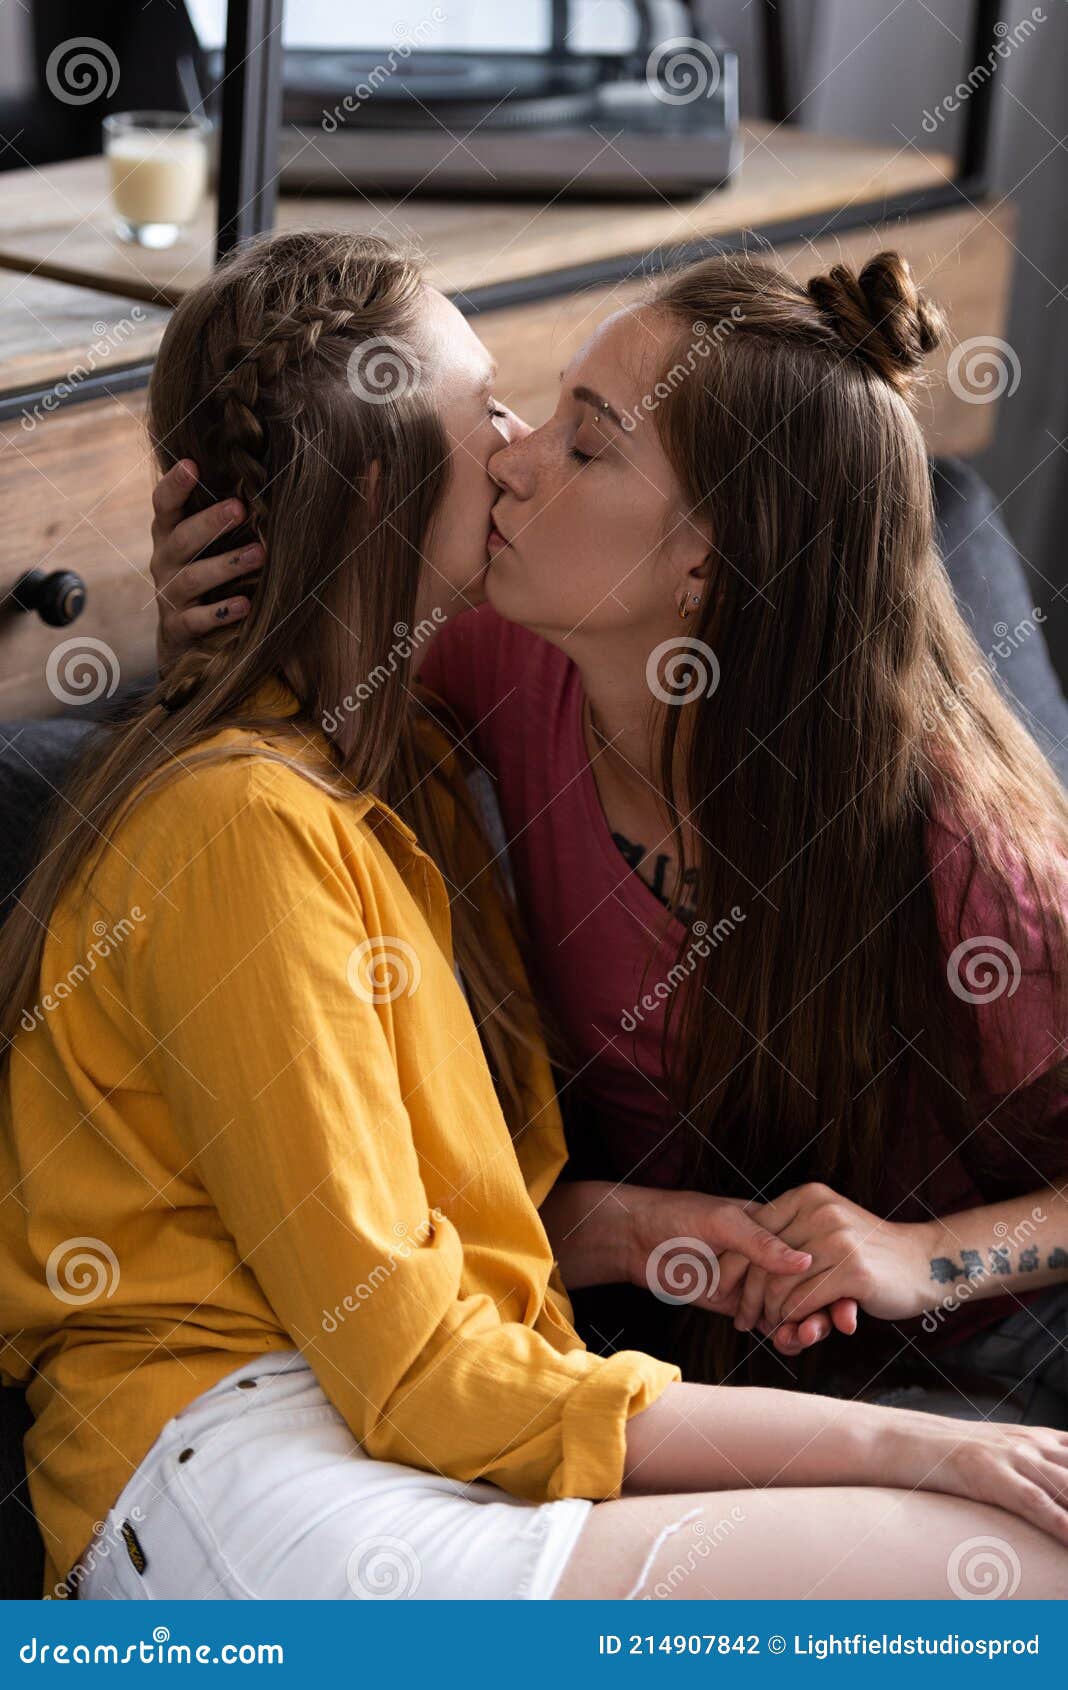 hot young lesbian kissing